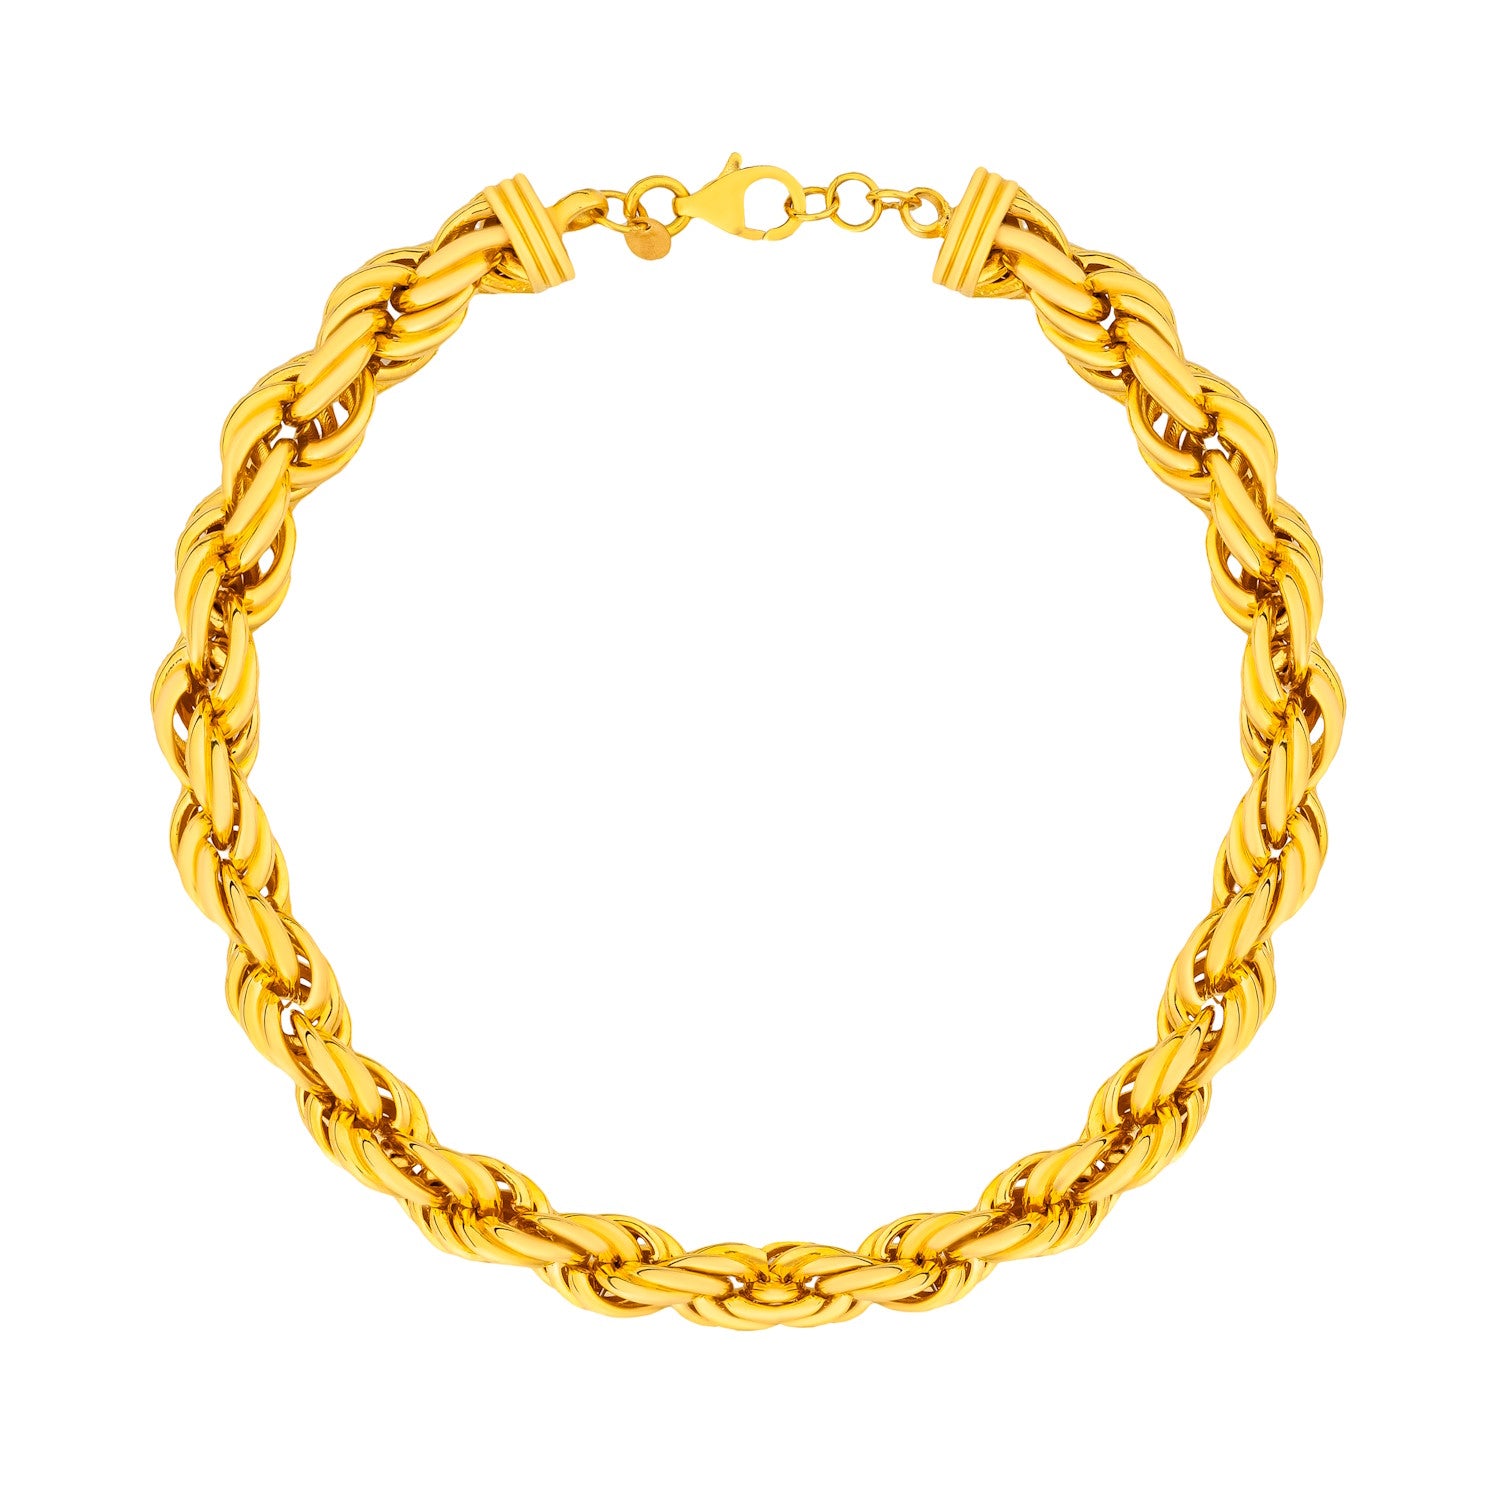 Homet 21K Yellow Gold Bracelet